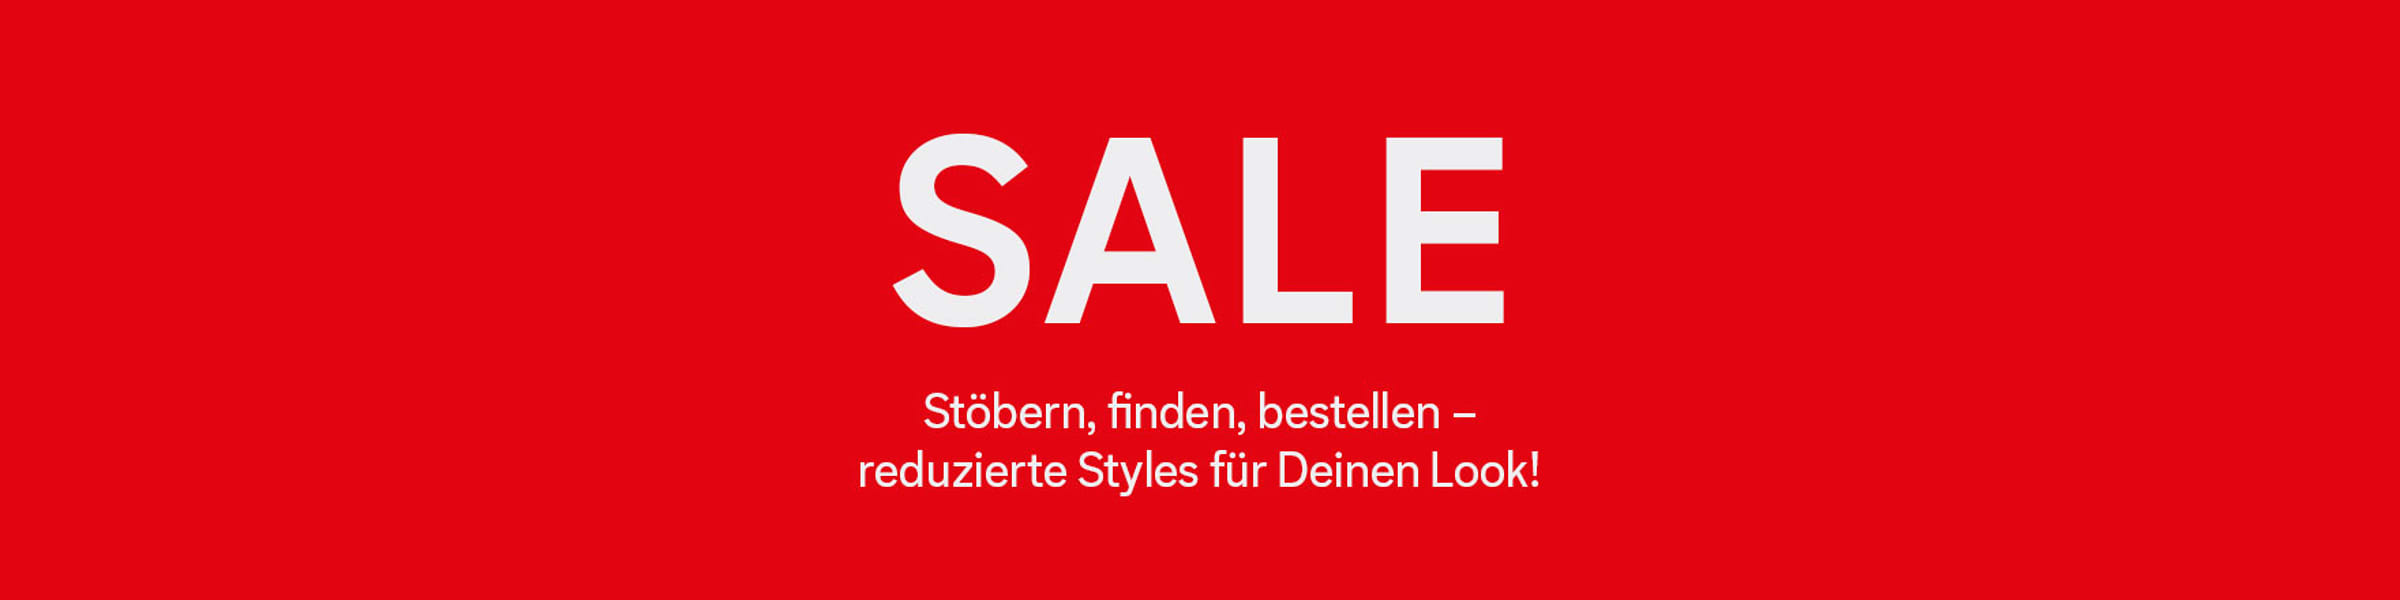 Org sale. C&A sale. Shop sale German. Evrozakaz. Bestellen.